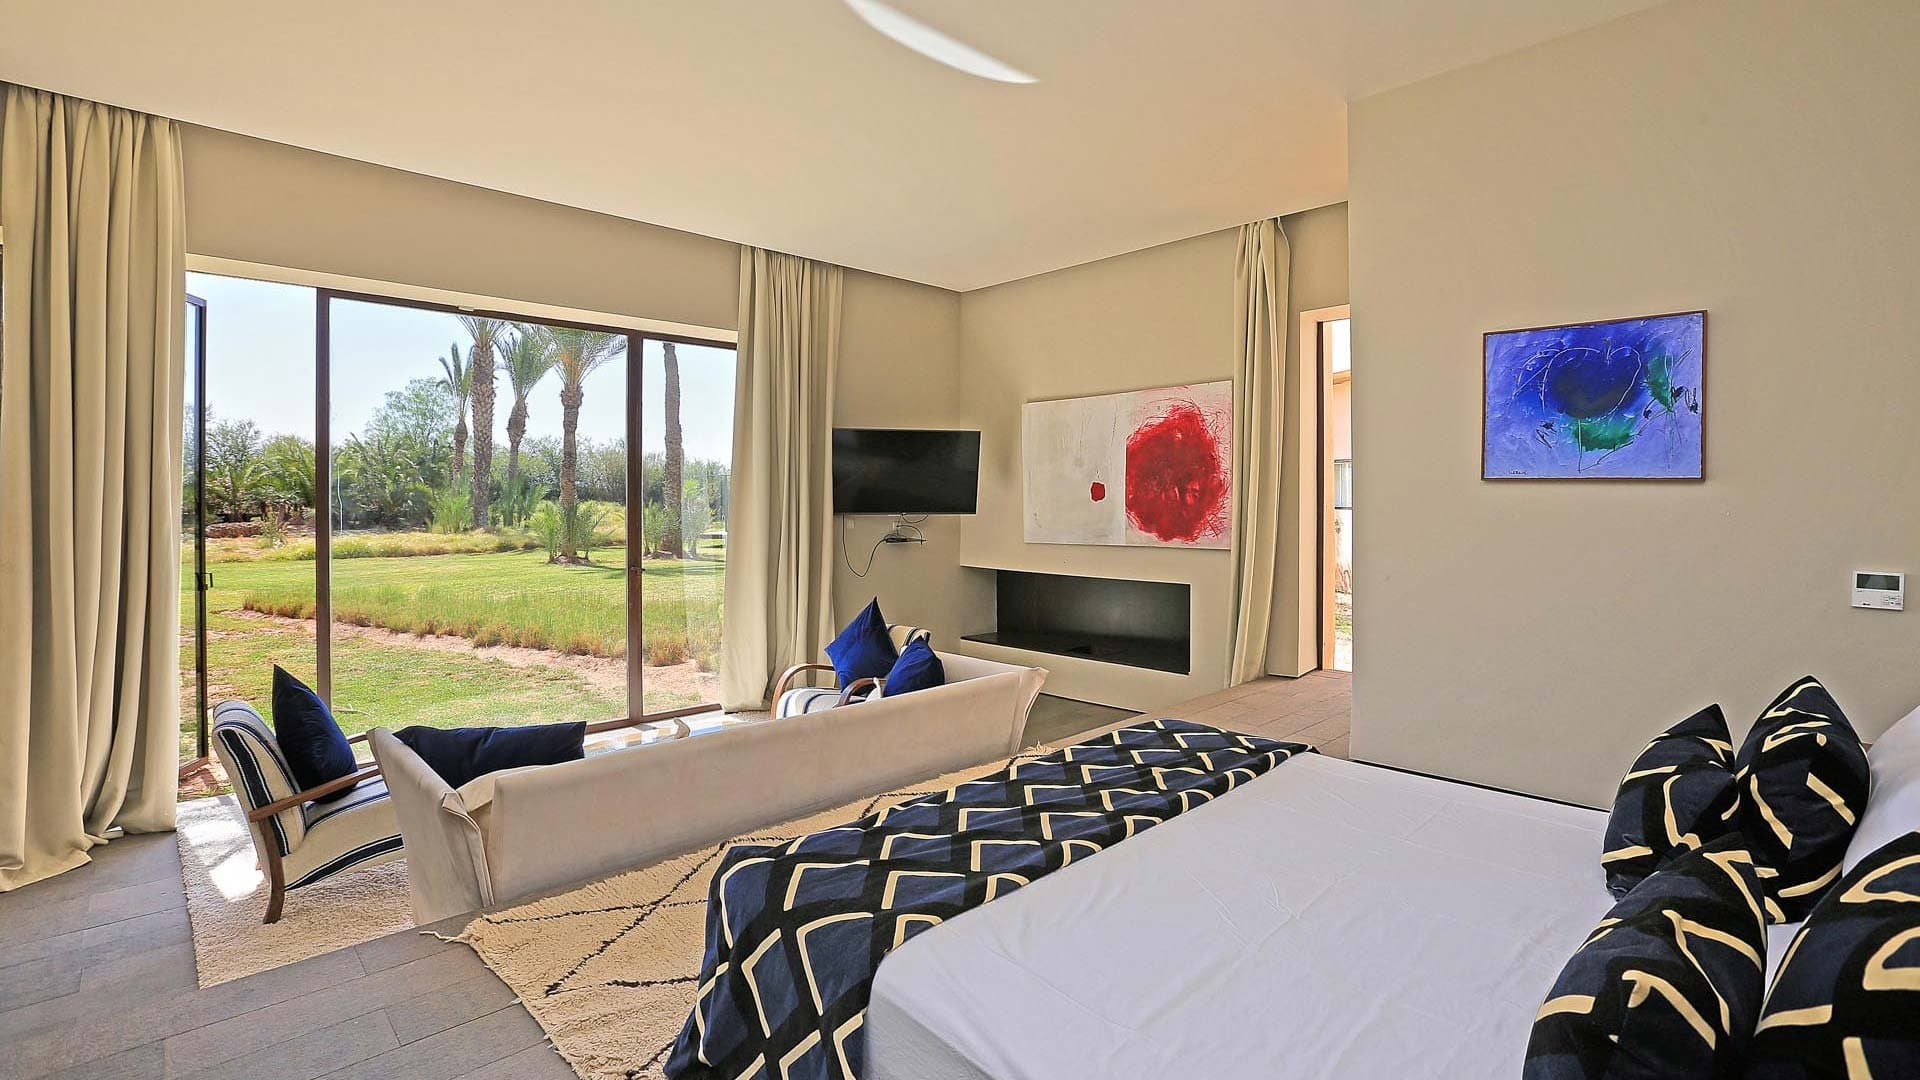 6 Bedroom Villa For Sale Marrakech Lp08713 236536a7244f5200.jpg